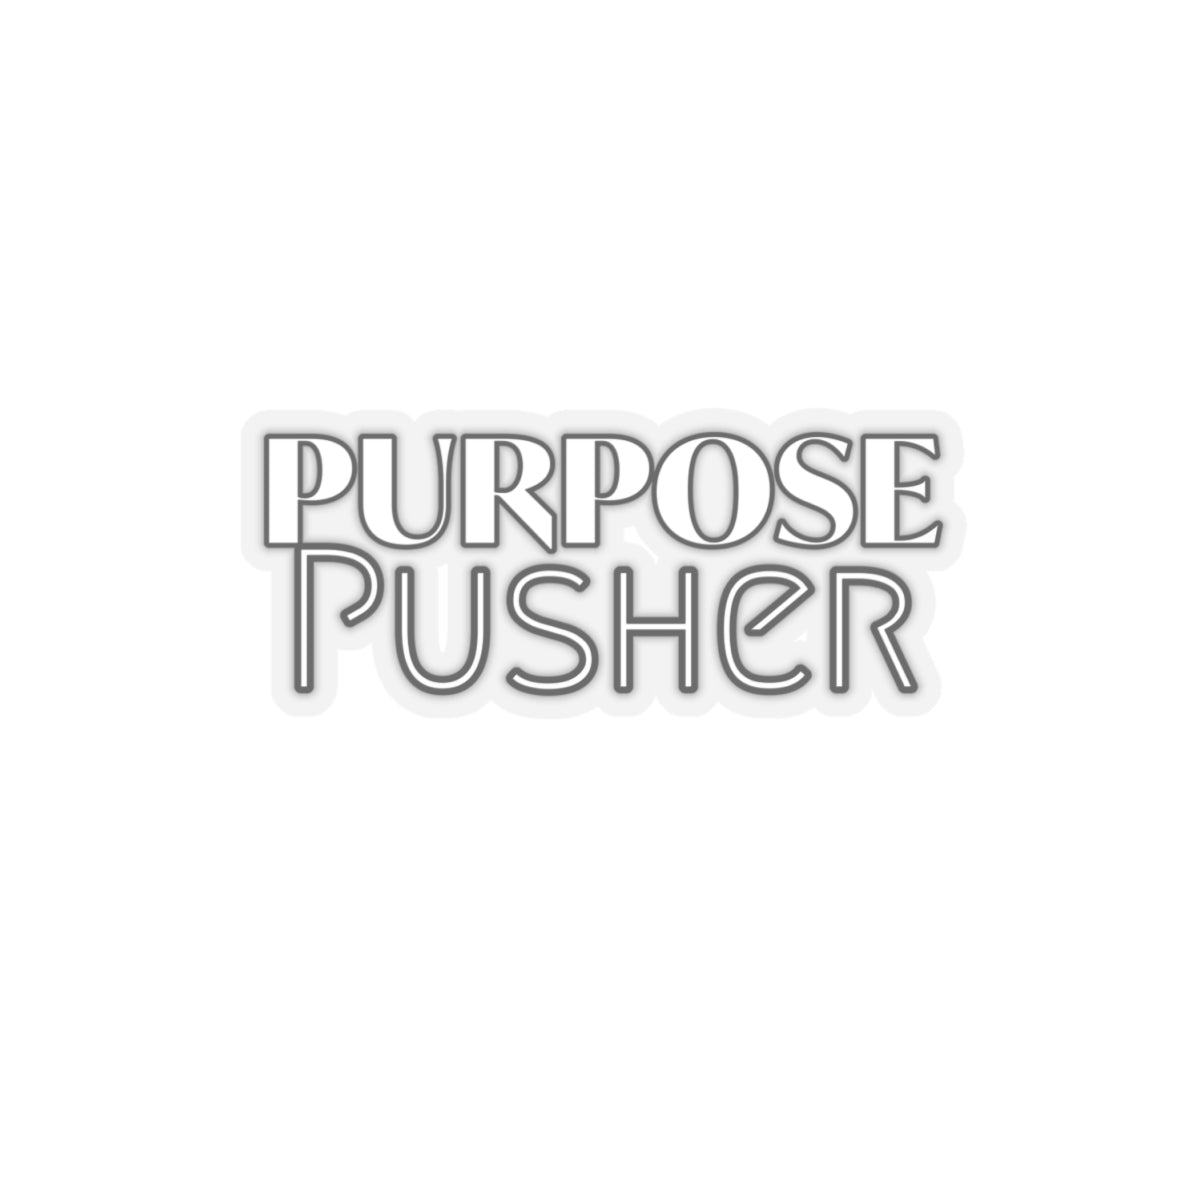 PURPOSE PUSHER Decal/Sticker - The Bible Junkies®